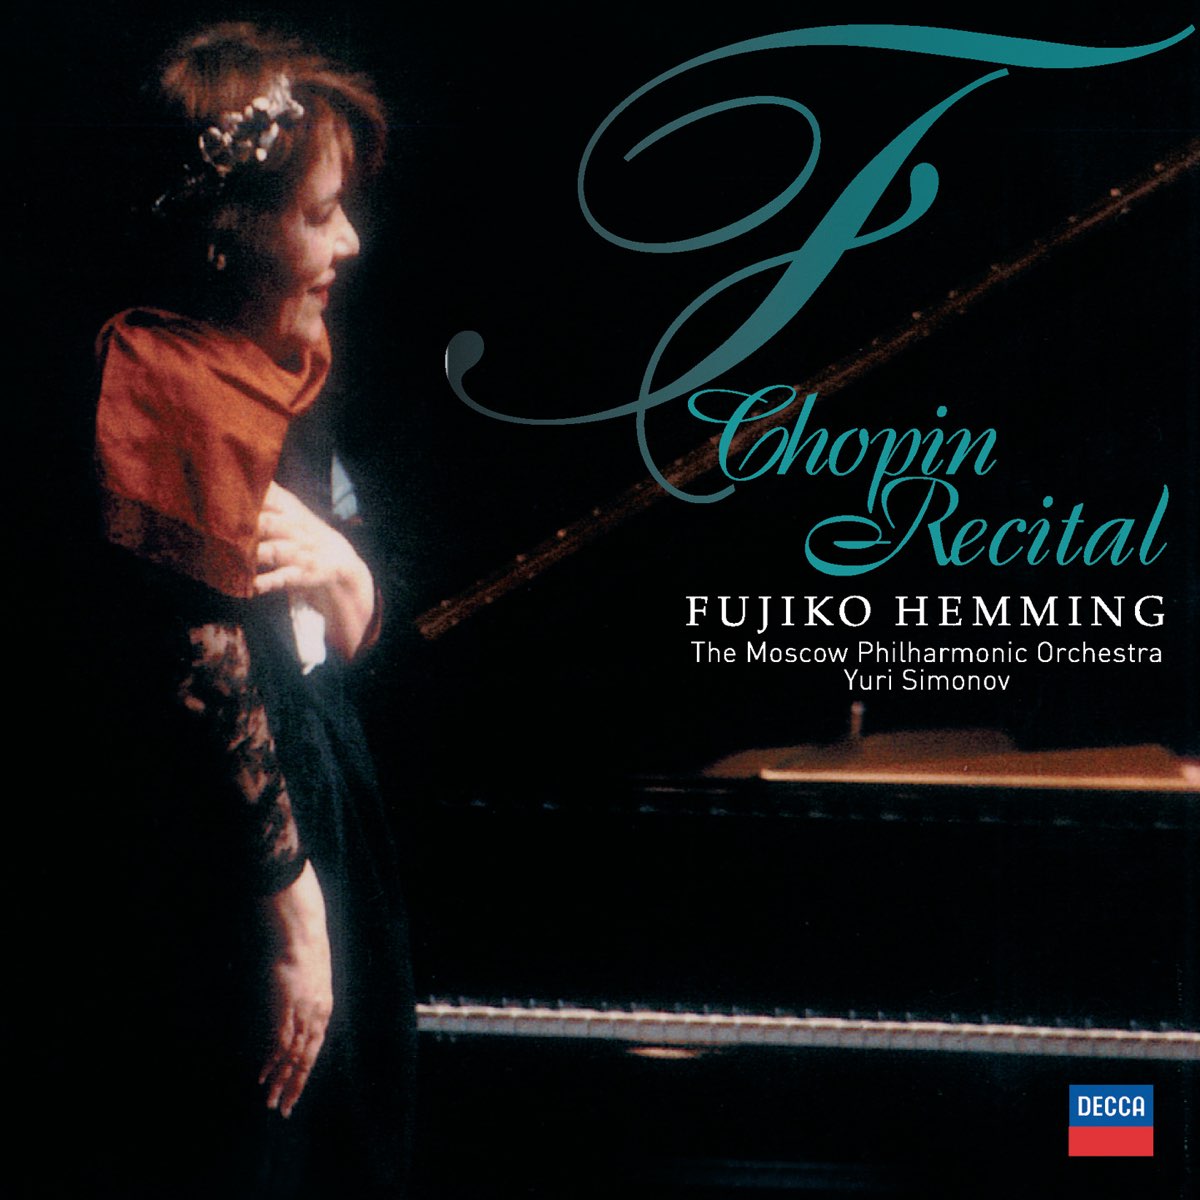 ‎Fujiko Hemming Chopin Recital by Fujiko Hemming on Apple Music